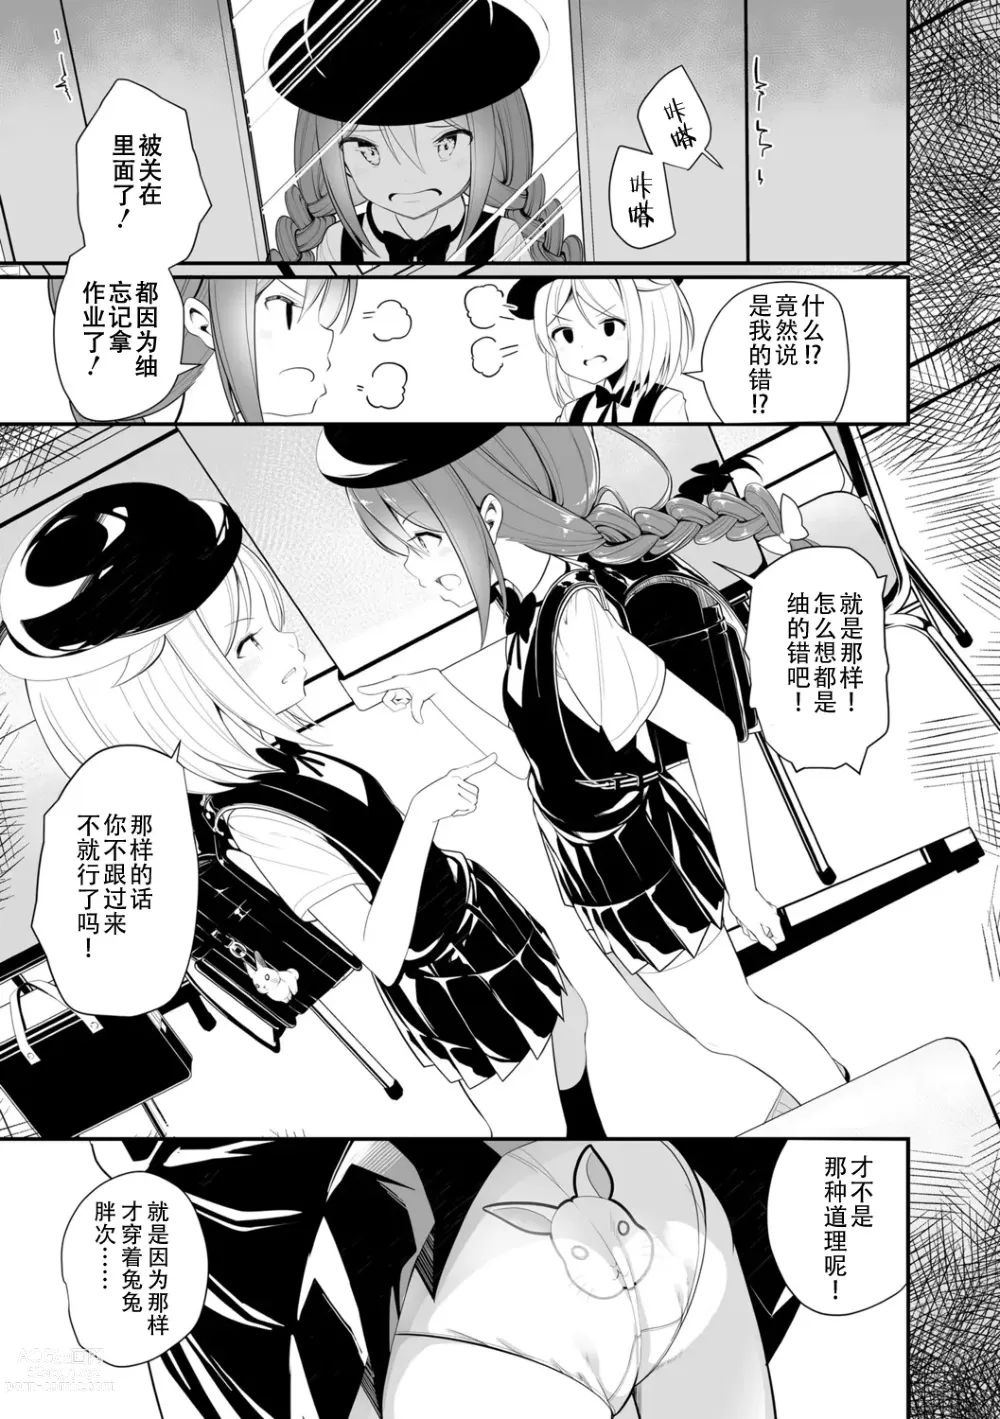 Page 3 of manga 越是吵架关系越好